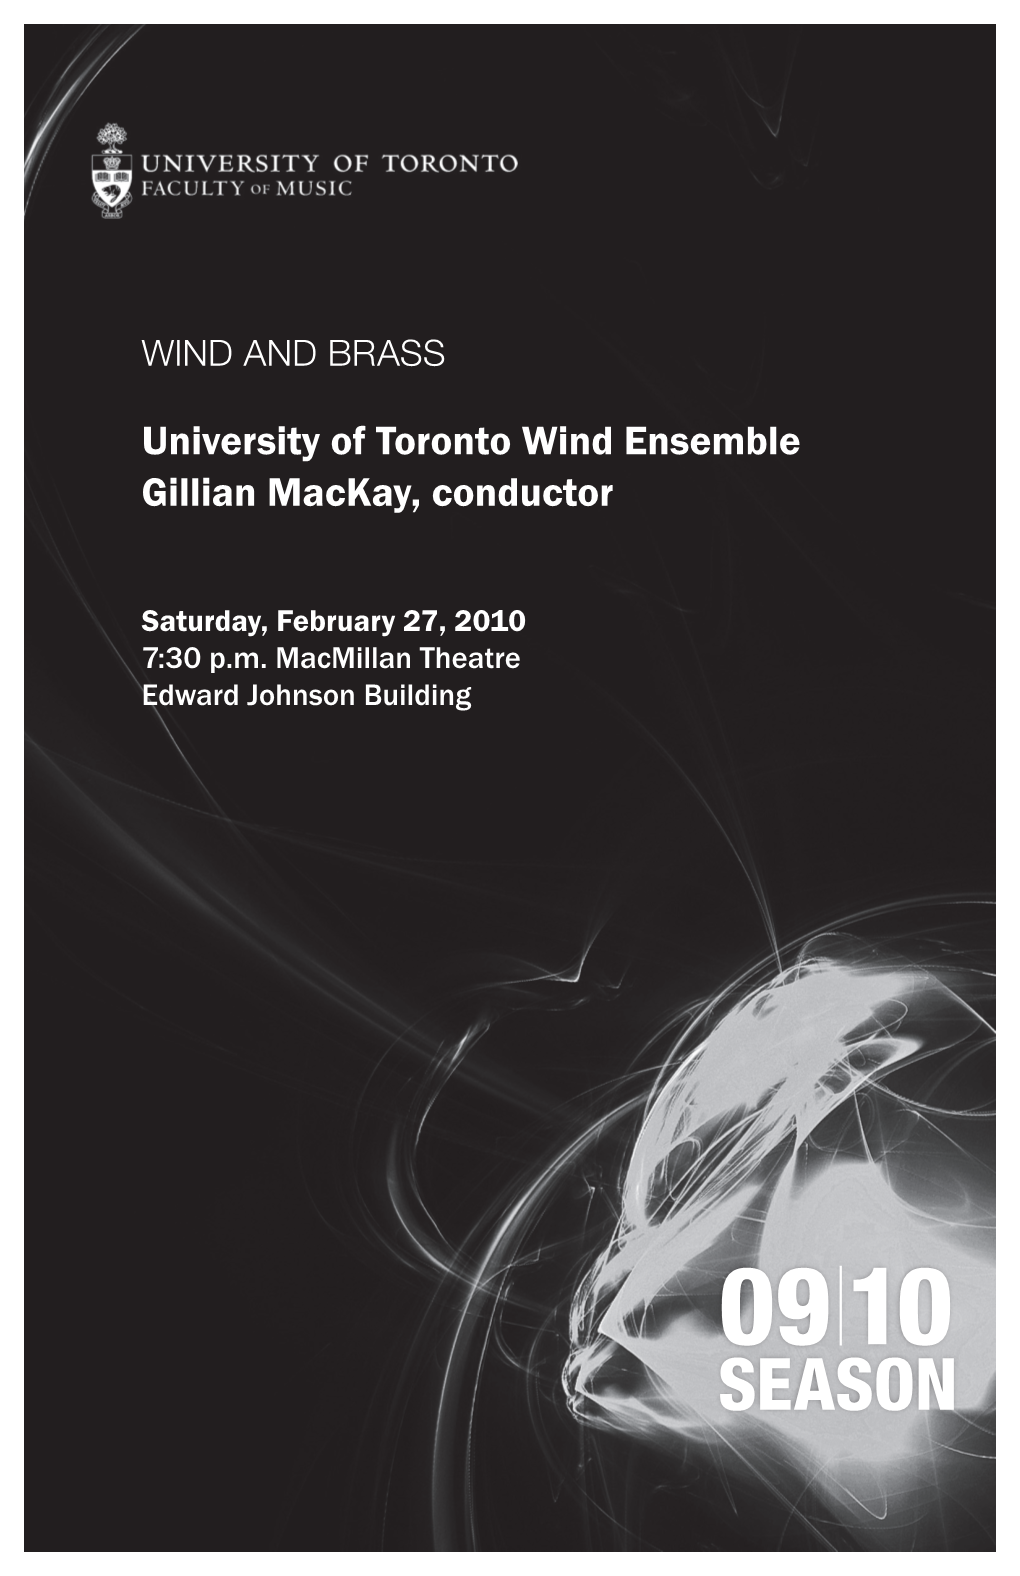 Season University of Toronto Wind Ensemble Gillian Mackay, Conductor